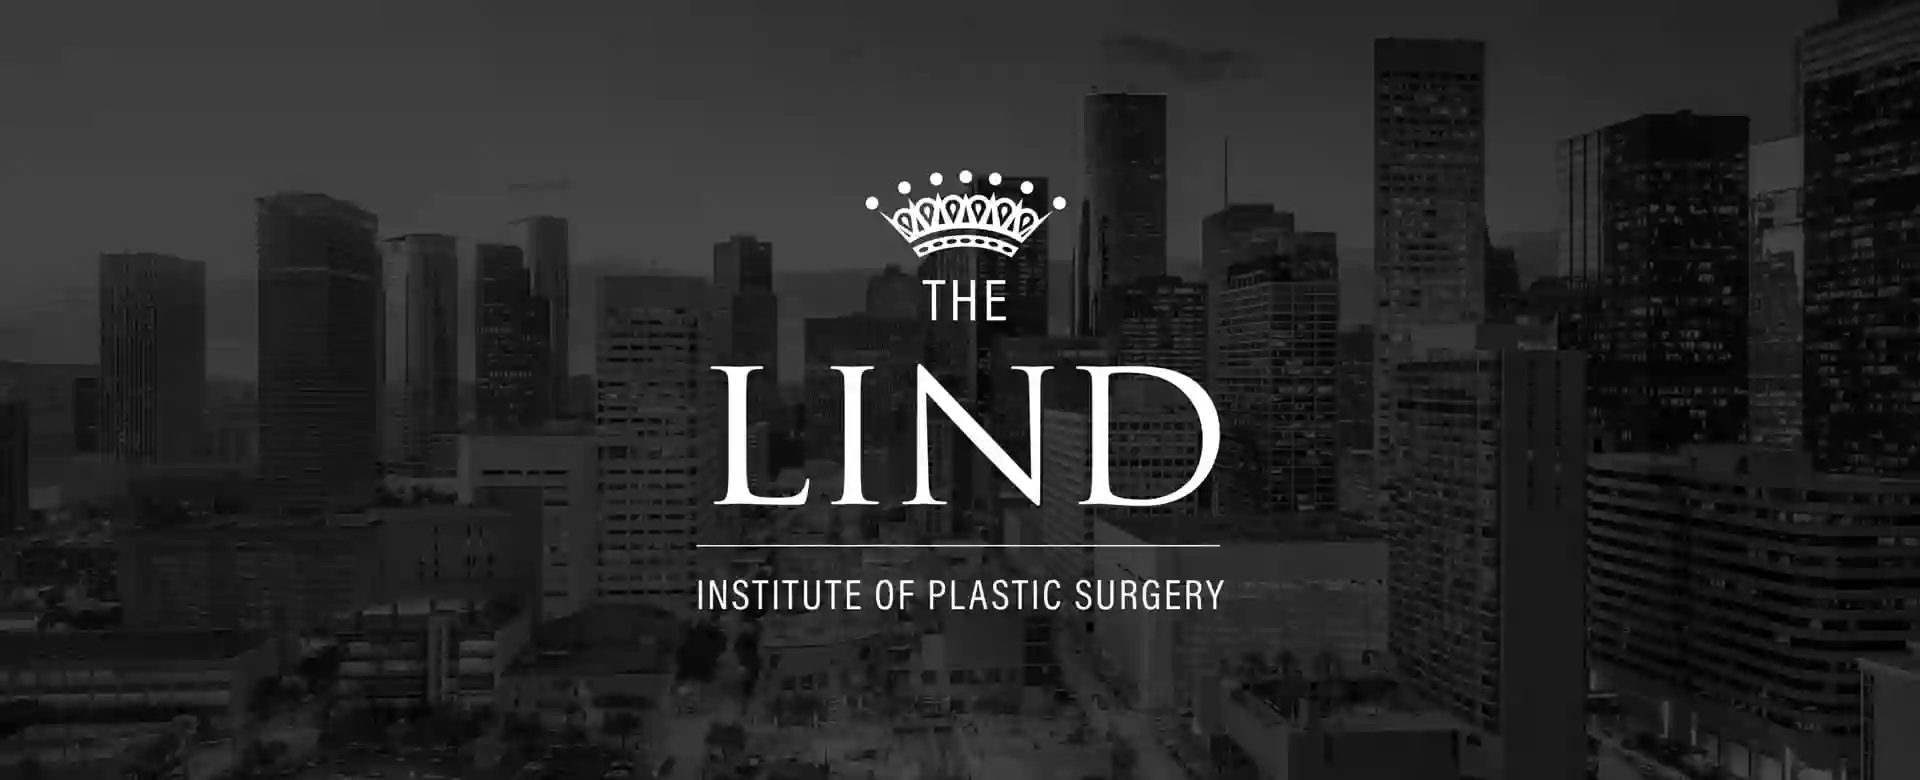 Dr. Jeffrey Lind, M.D. | The Lind Institute of Plastic Surgery